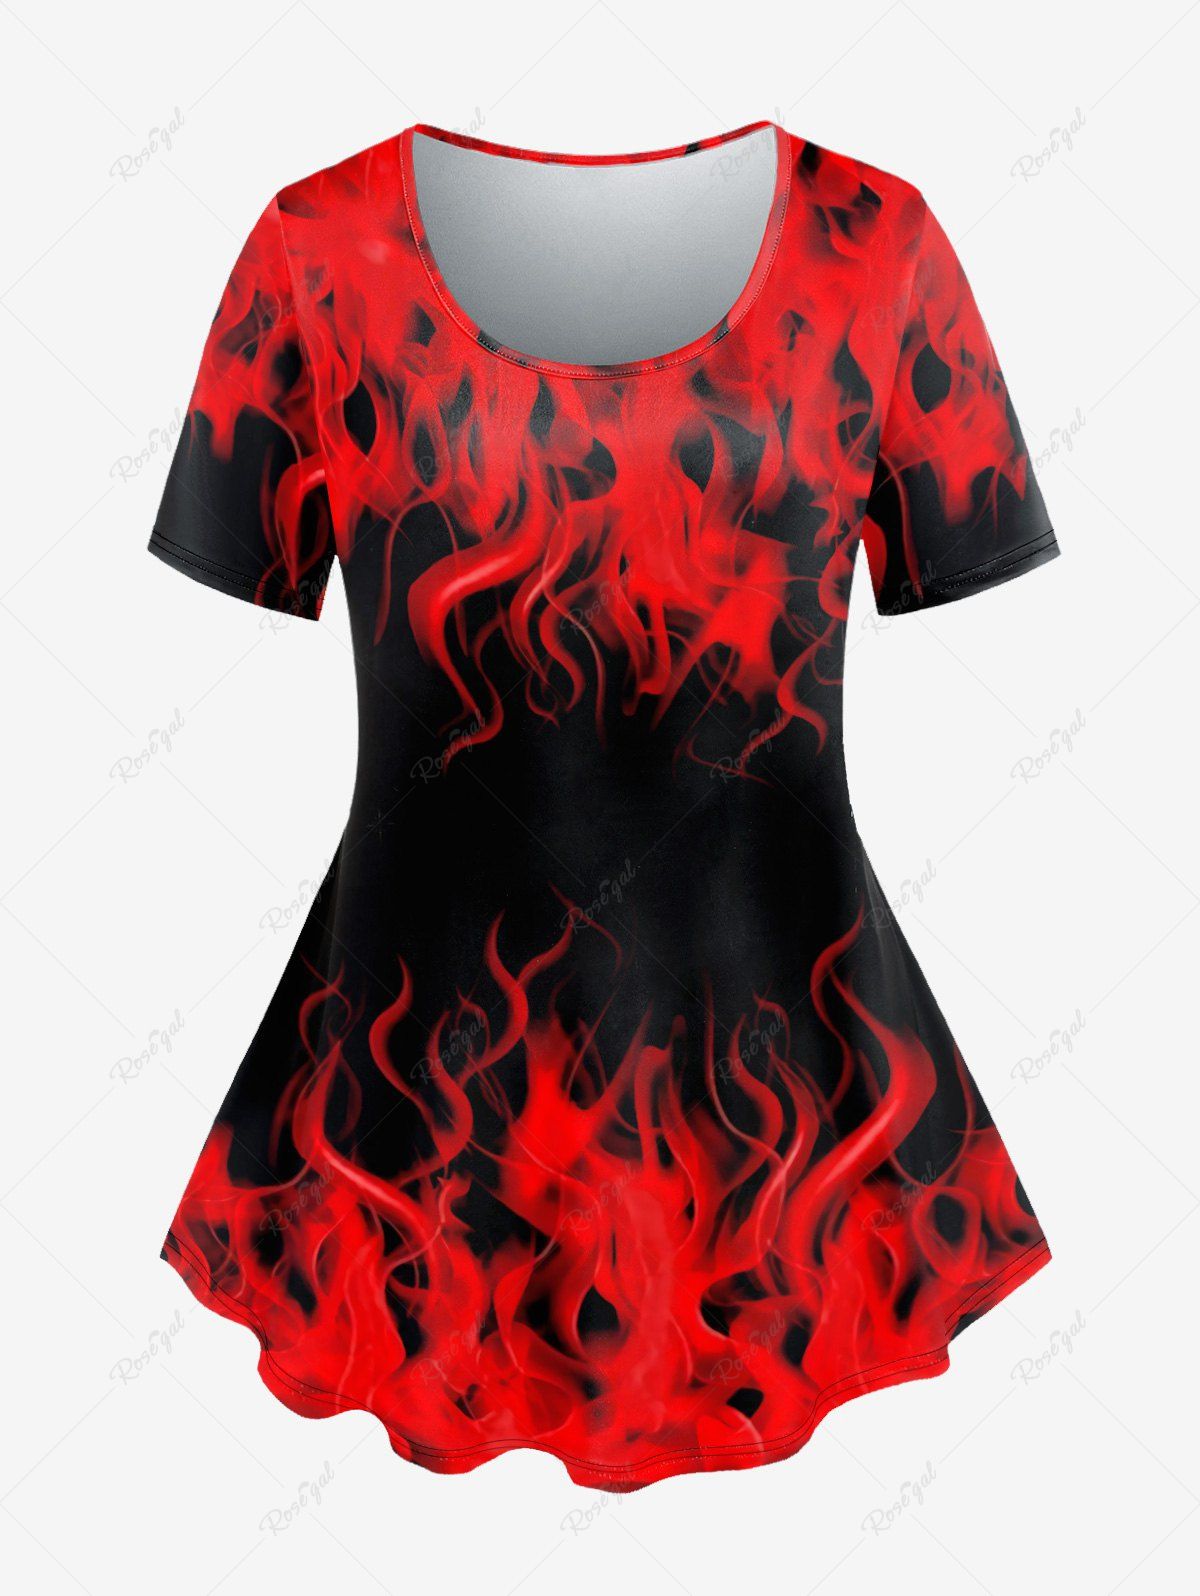 Fashion Gothic 3D Flame Print Short Sleeve T-Shirt  